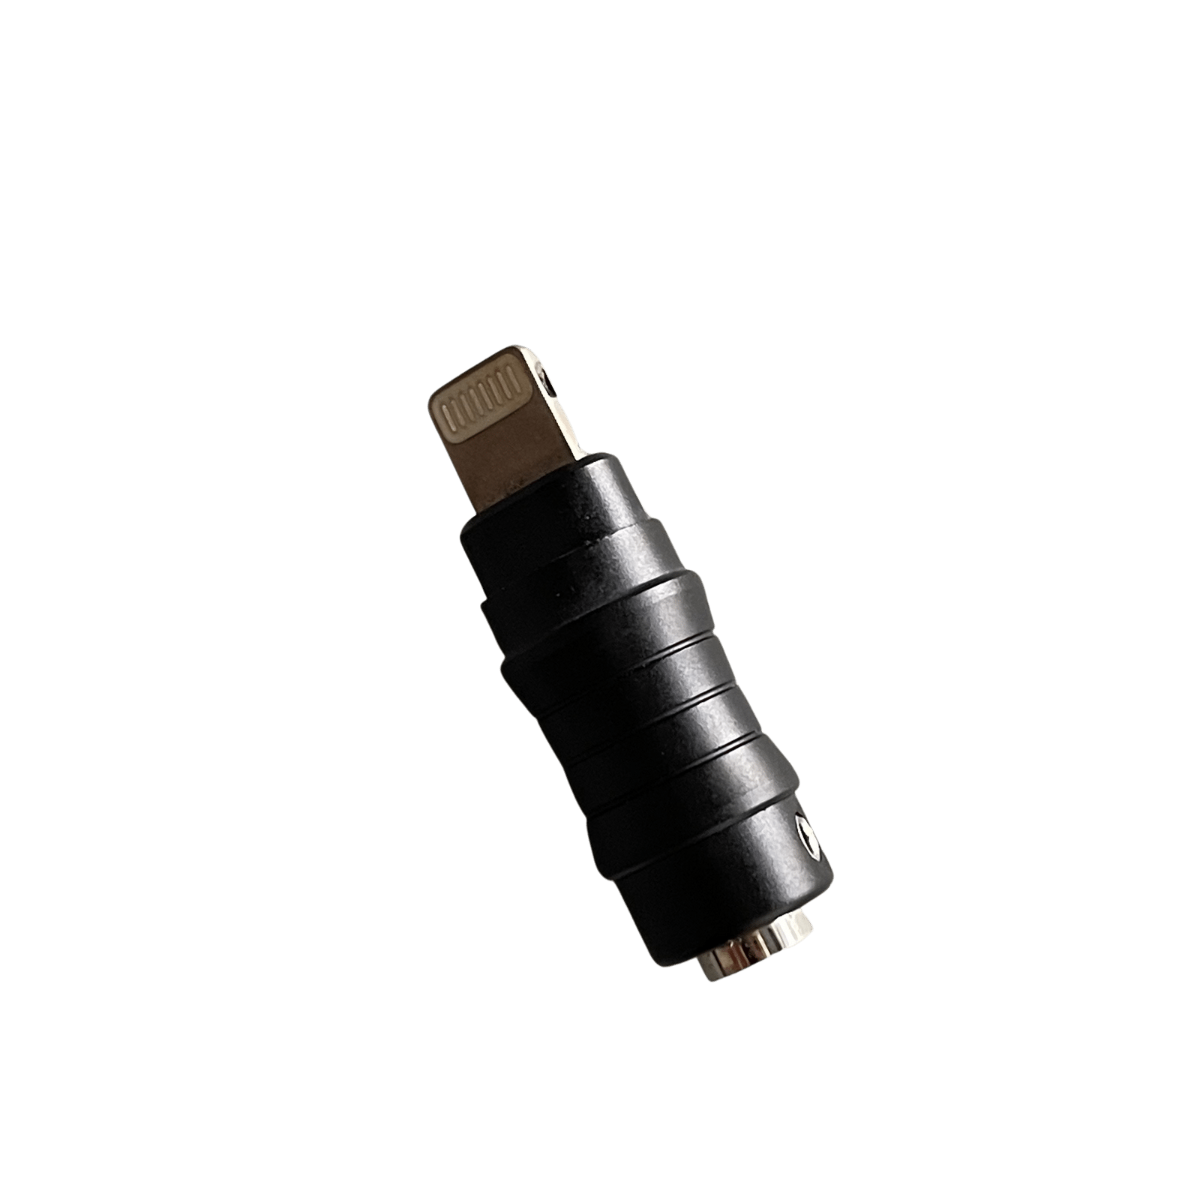 Meenova Lightning Male to 3.5mm Female DAC Adapter - Straight Plug